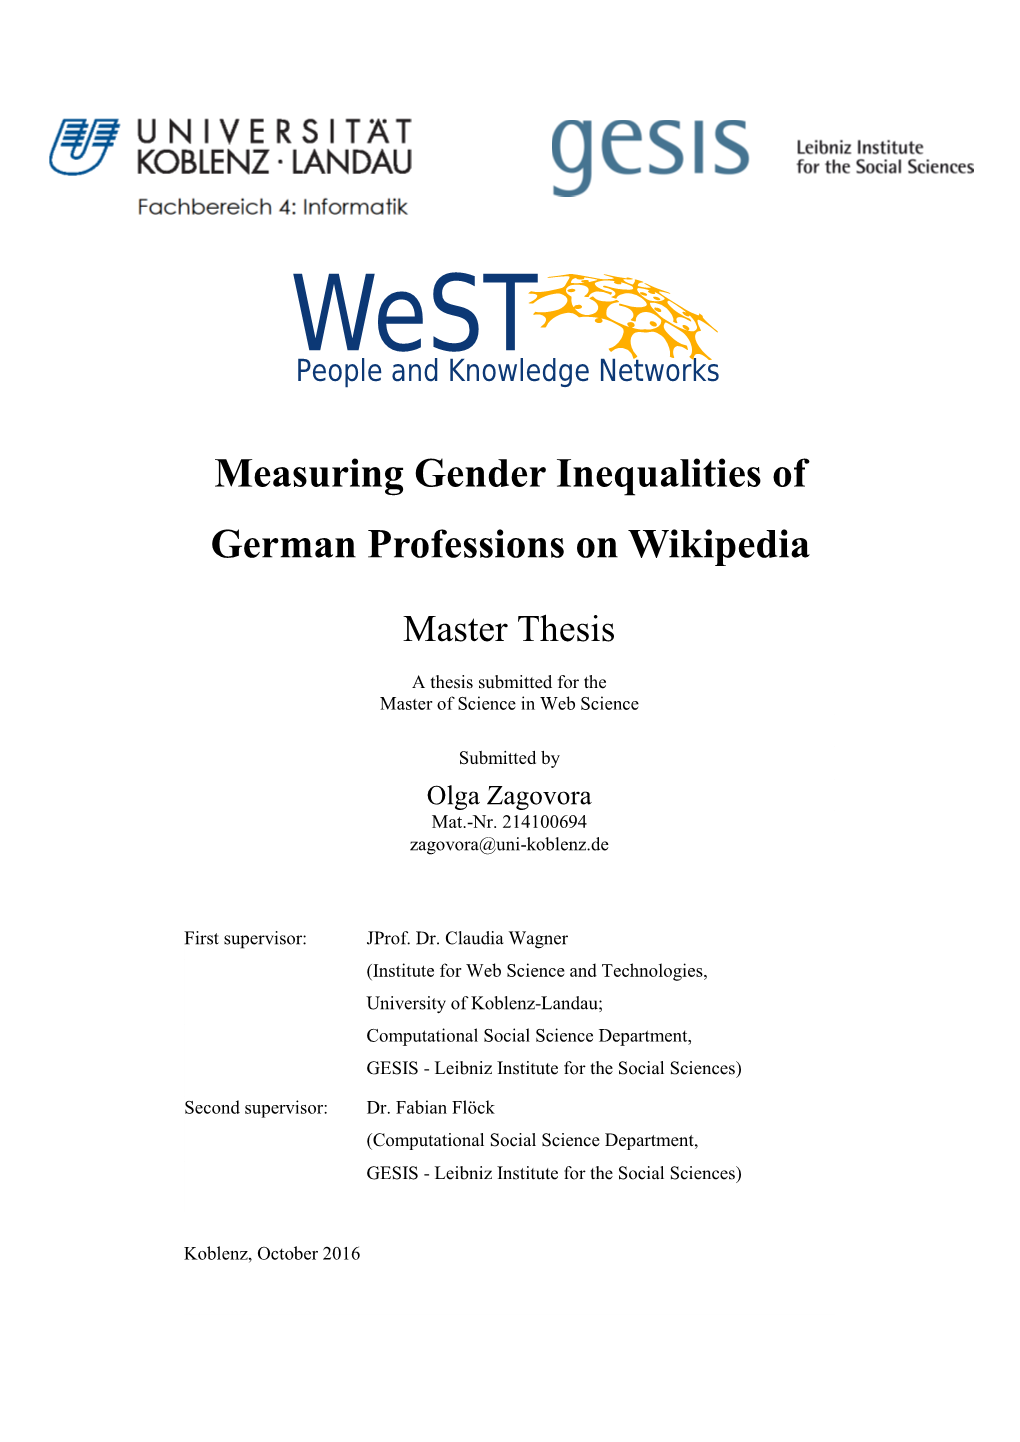 Measuring Gender Inequalities of German Professions on Wikipedia